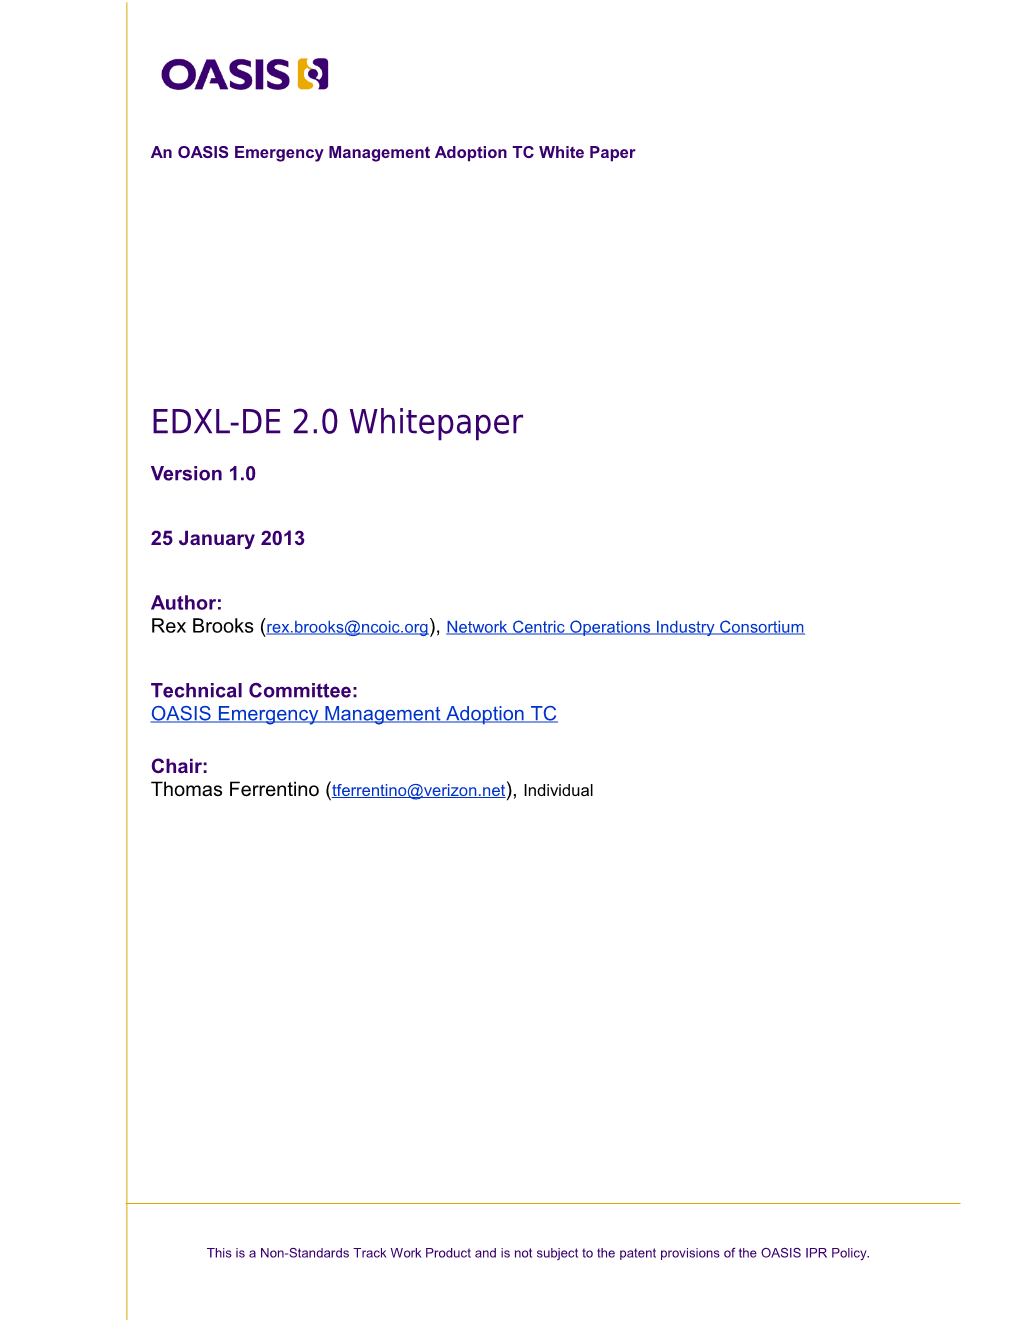 EDXL-DE 2.0 Whitepaper